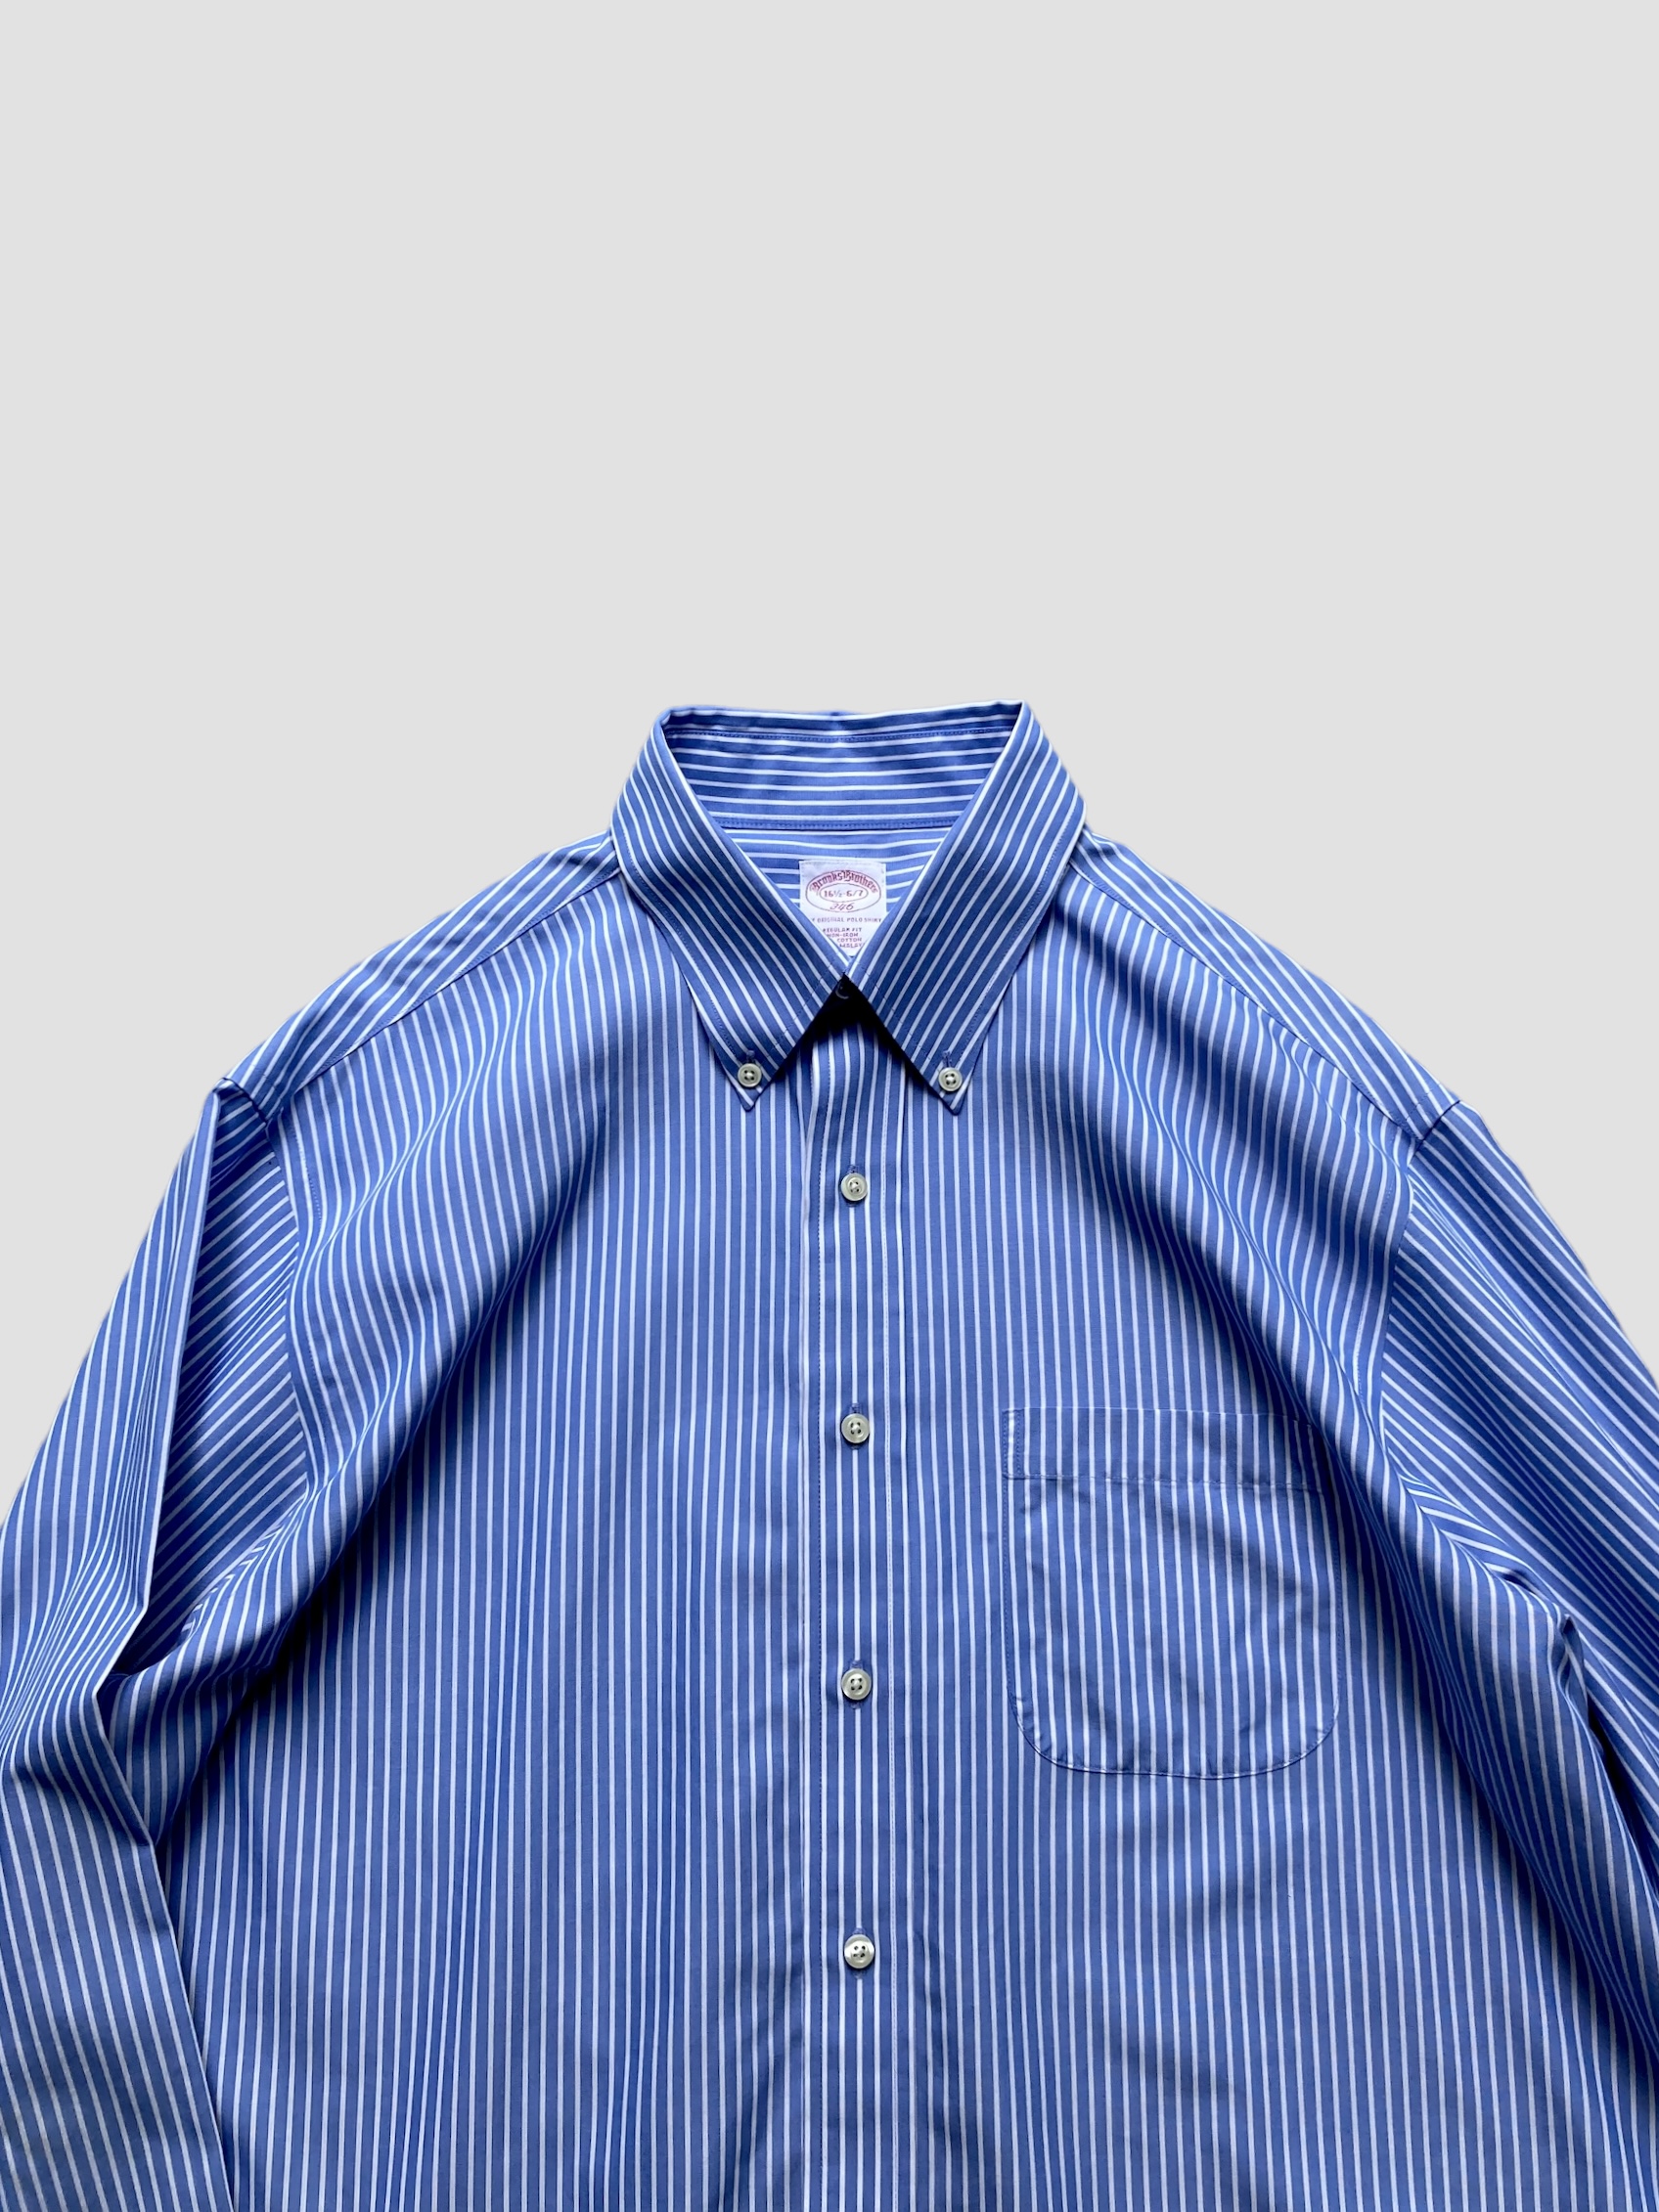 Brooks Brothers Stripe B.D Shirt